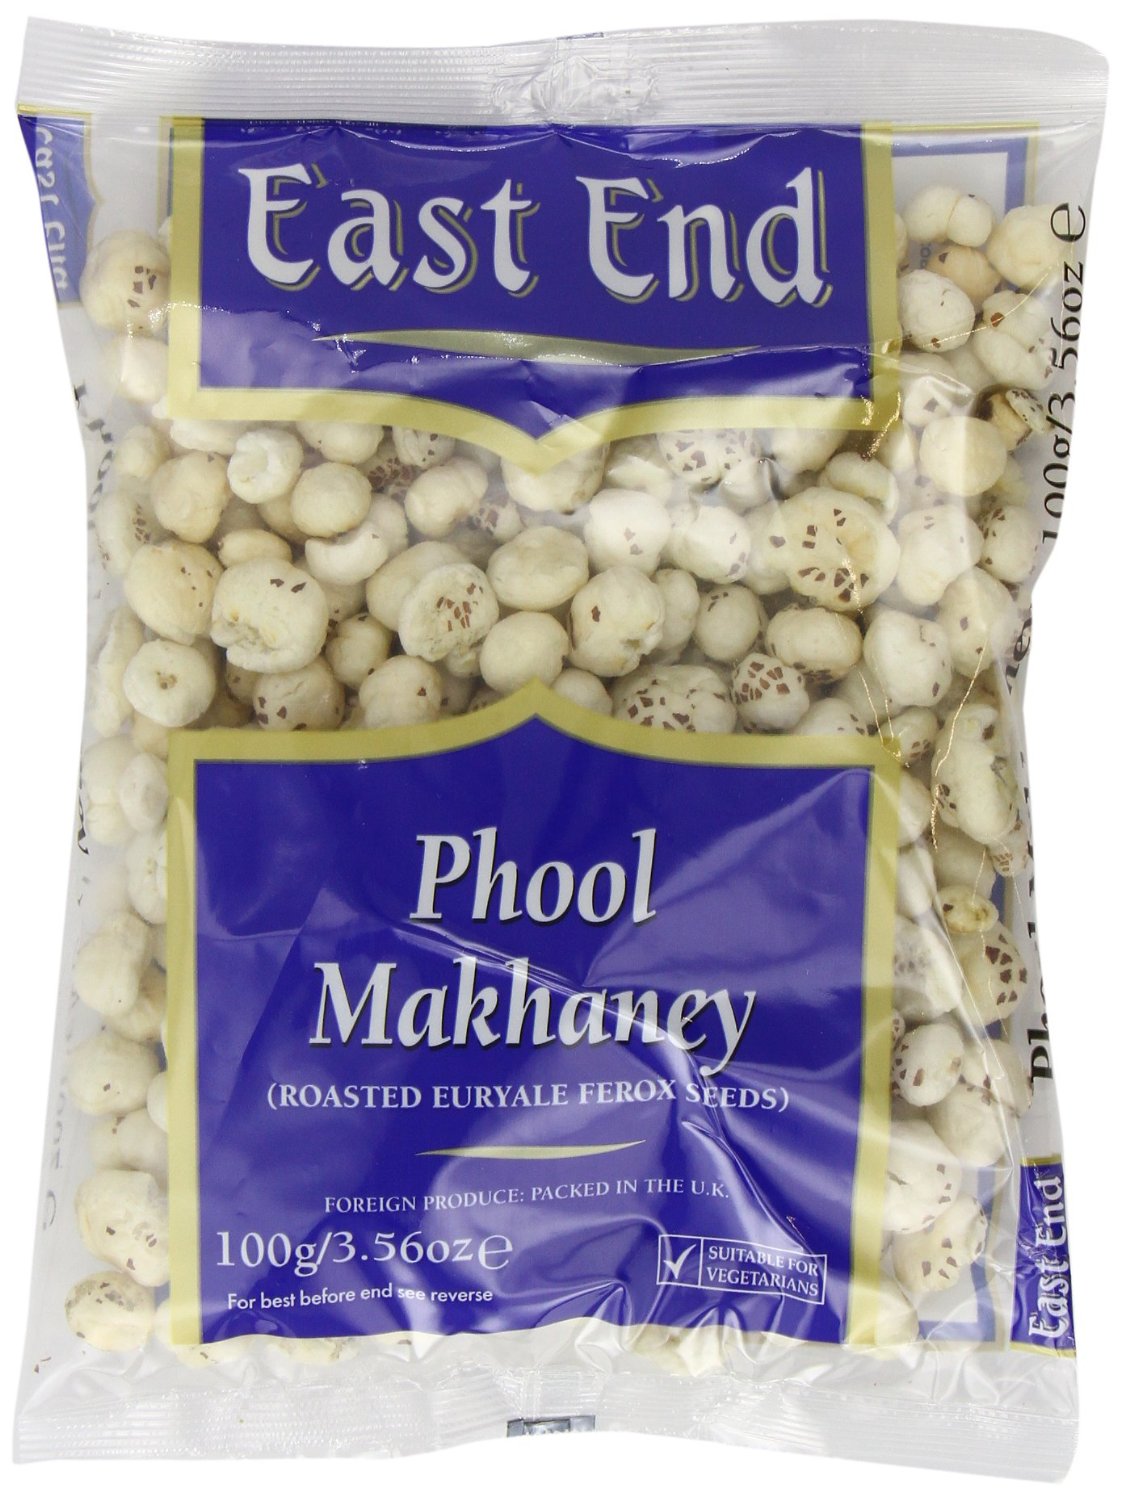 East End Phool Makhaney